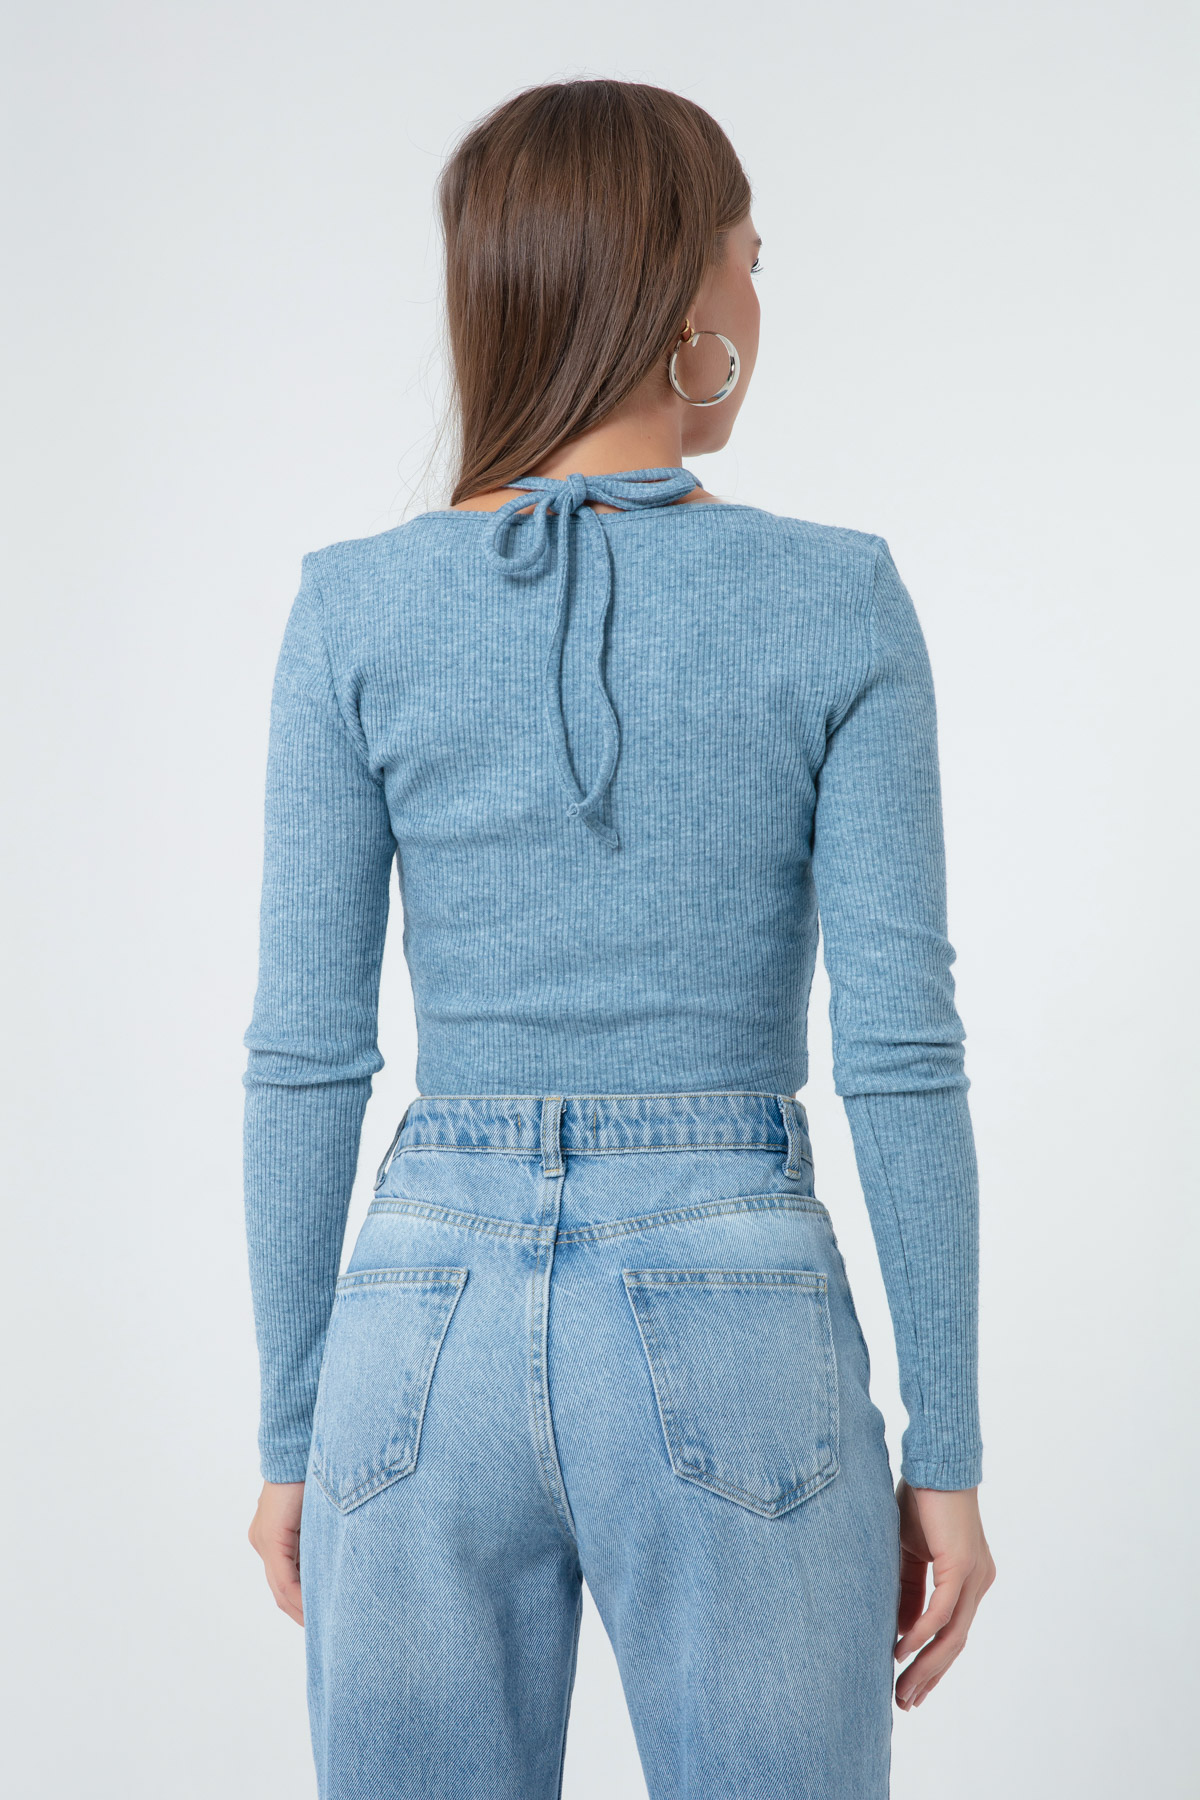 Women's Blue Long Sleeve Knitted Crop